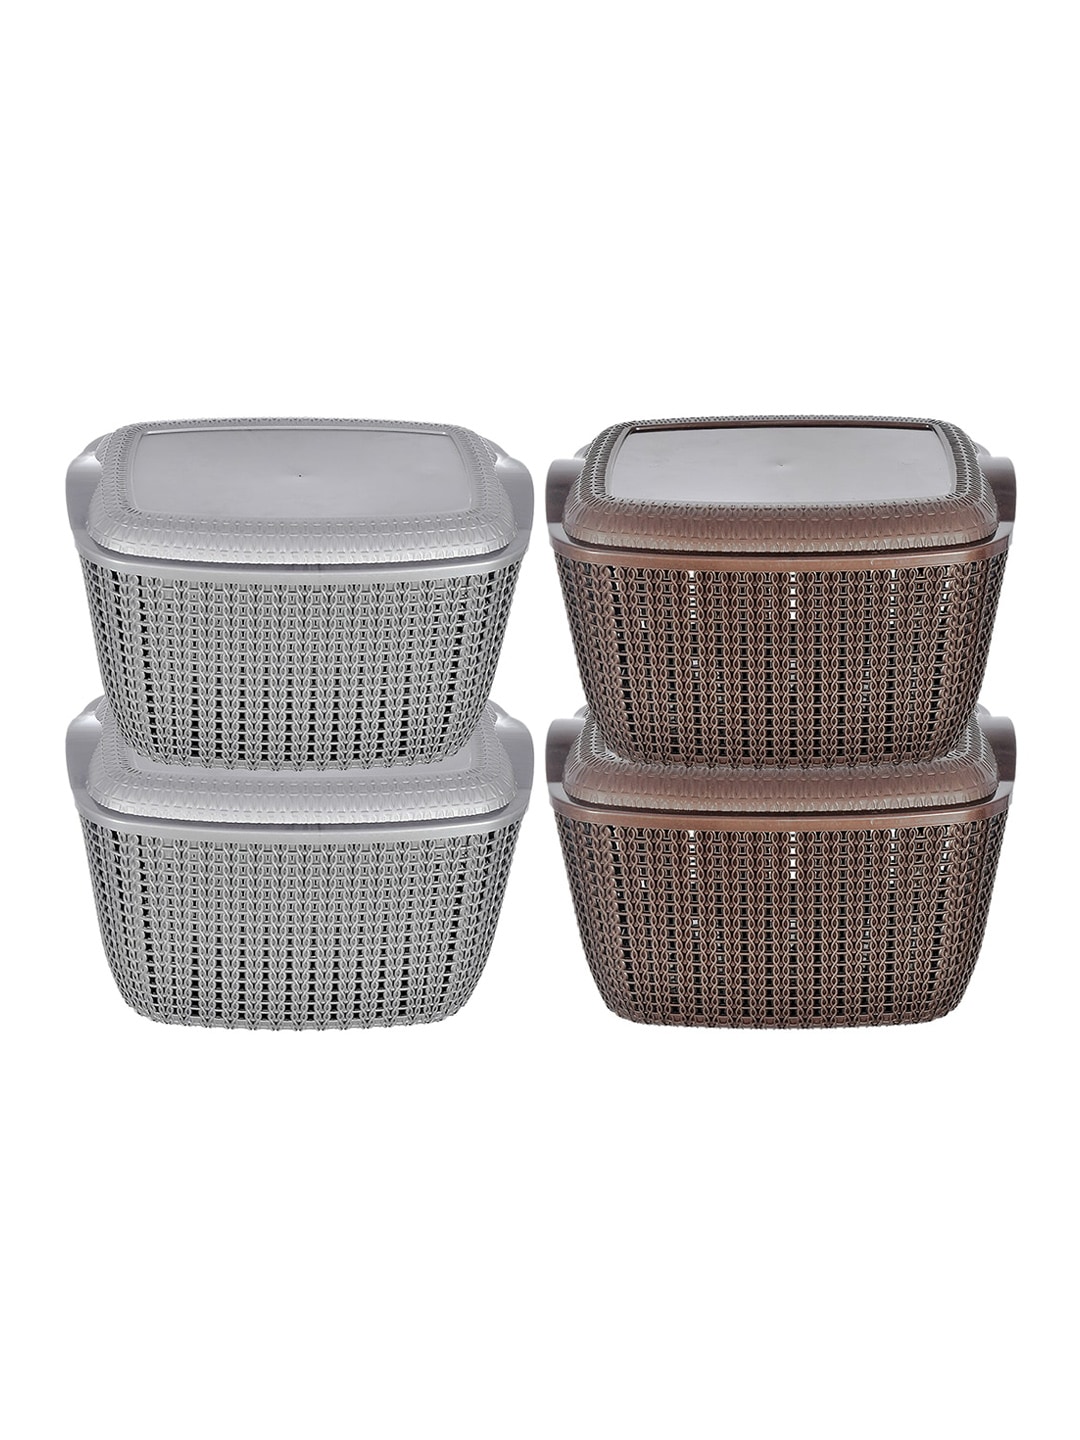 Kuber Industries Set Of 2 Grey & Brown Textured Multipurpose Basket With Lids Price in India